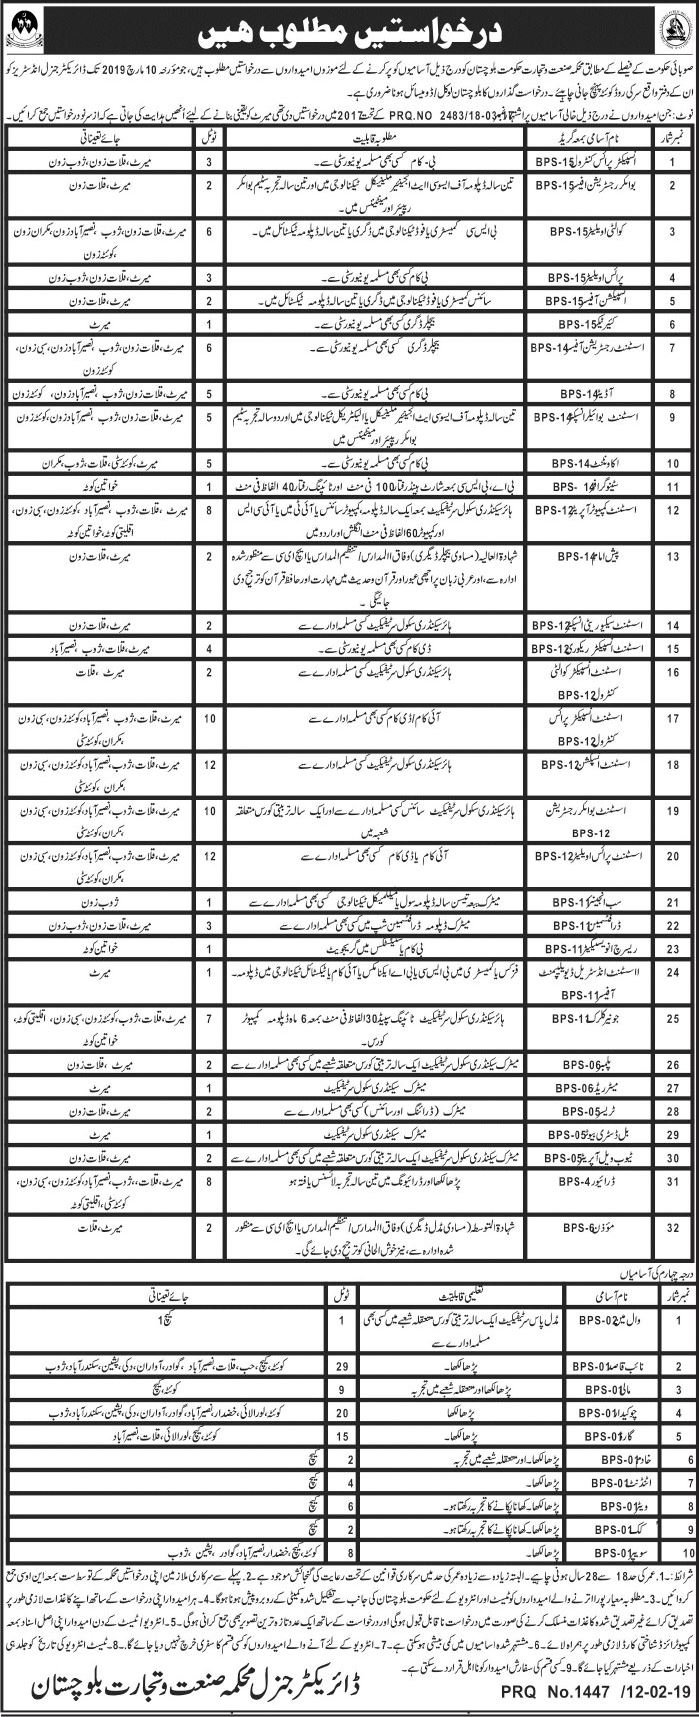 Balochistan Industries & Commerce Department Jobs 2019 for 100+ Posts (Multiple Categories) (Multiple Cities)